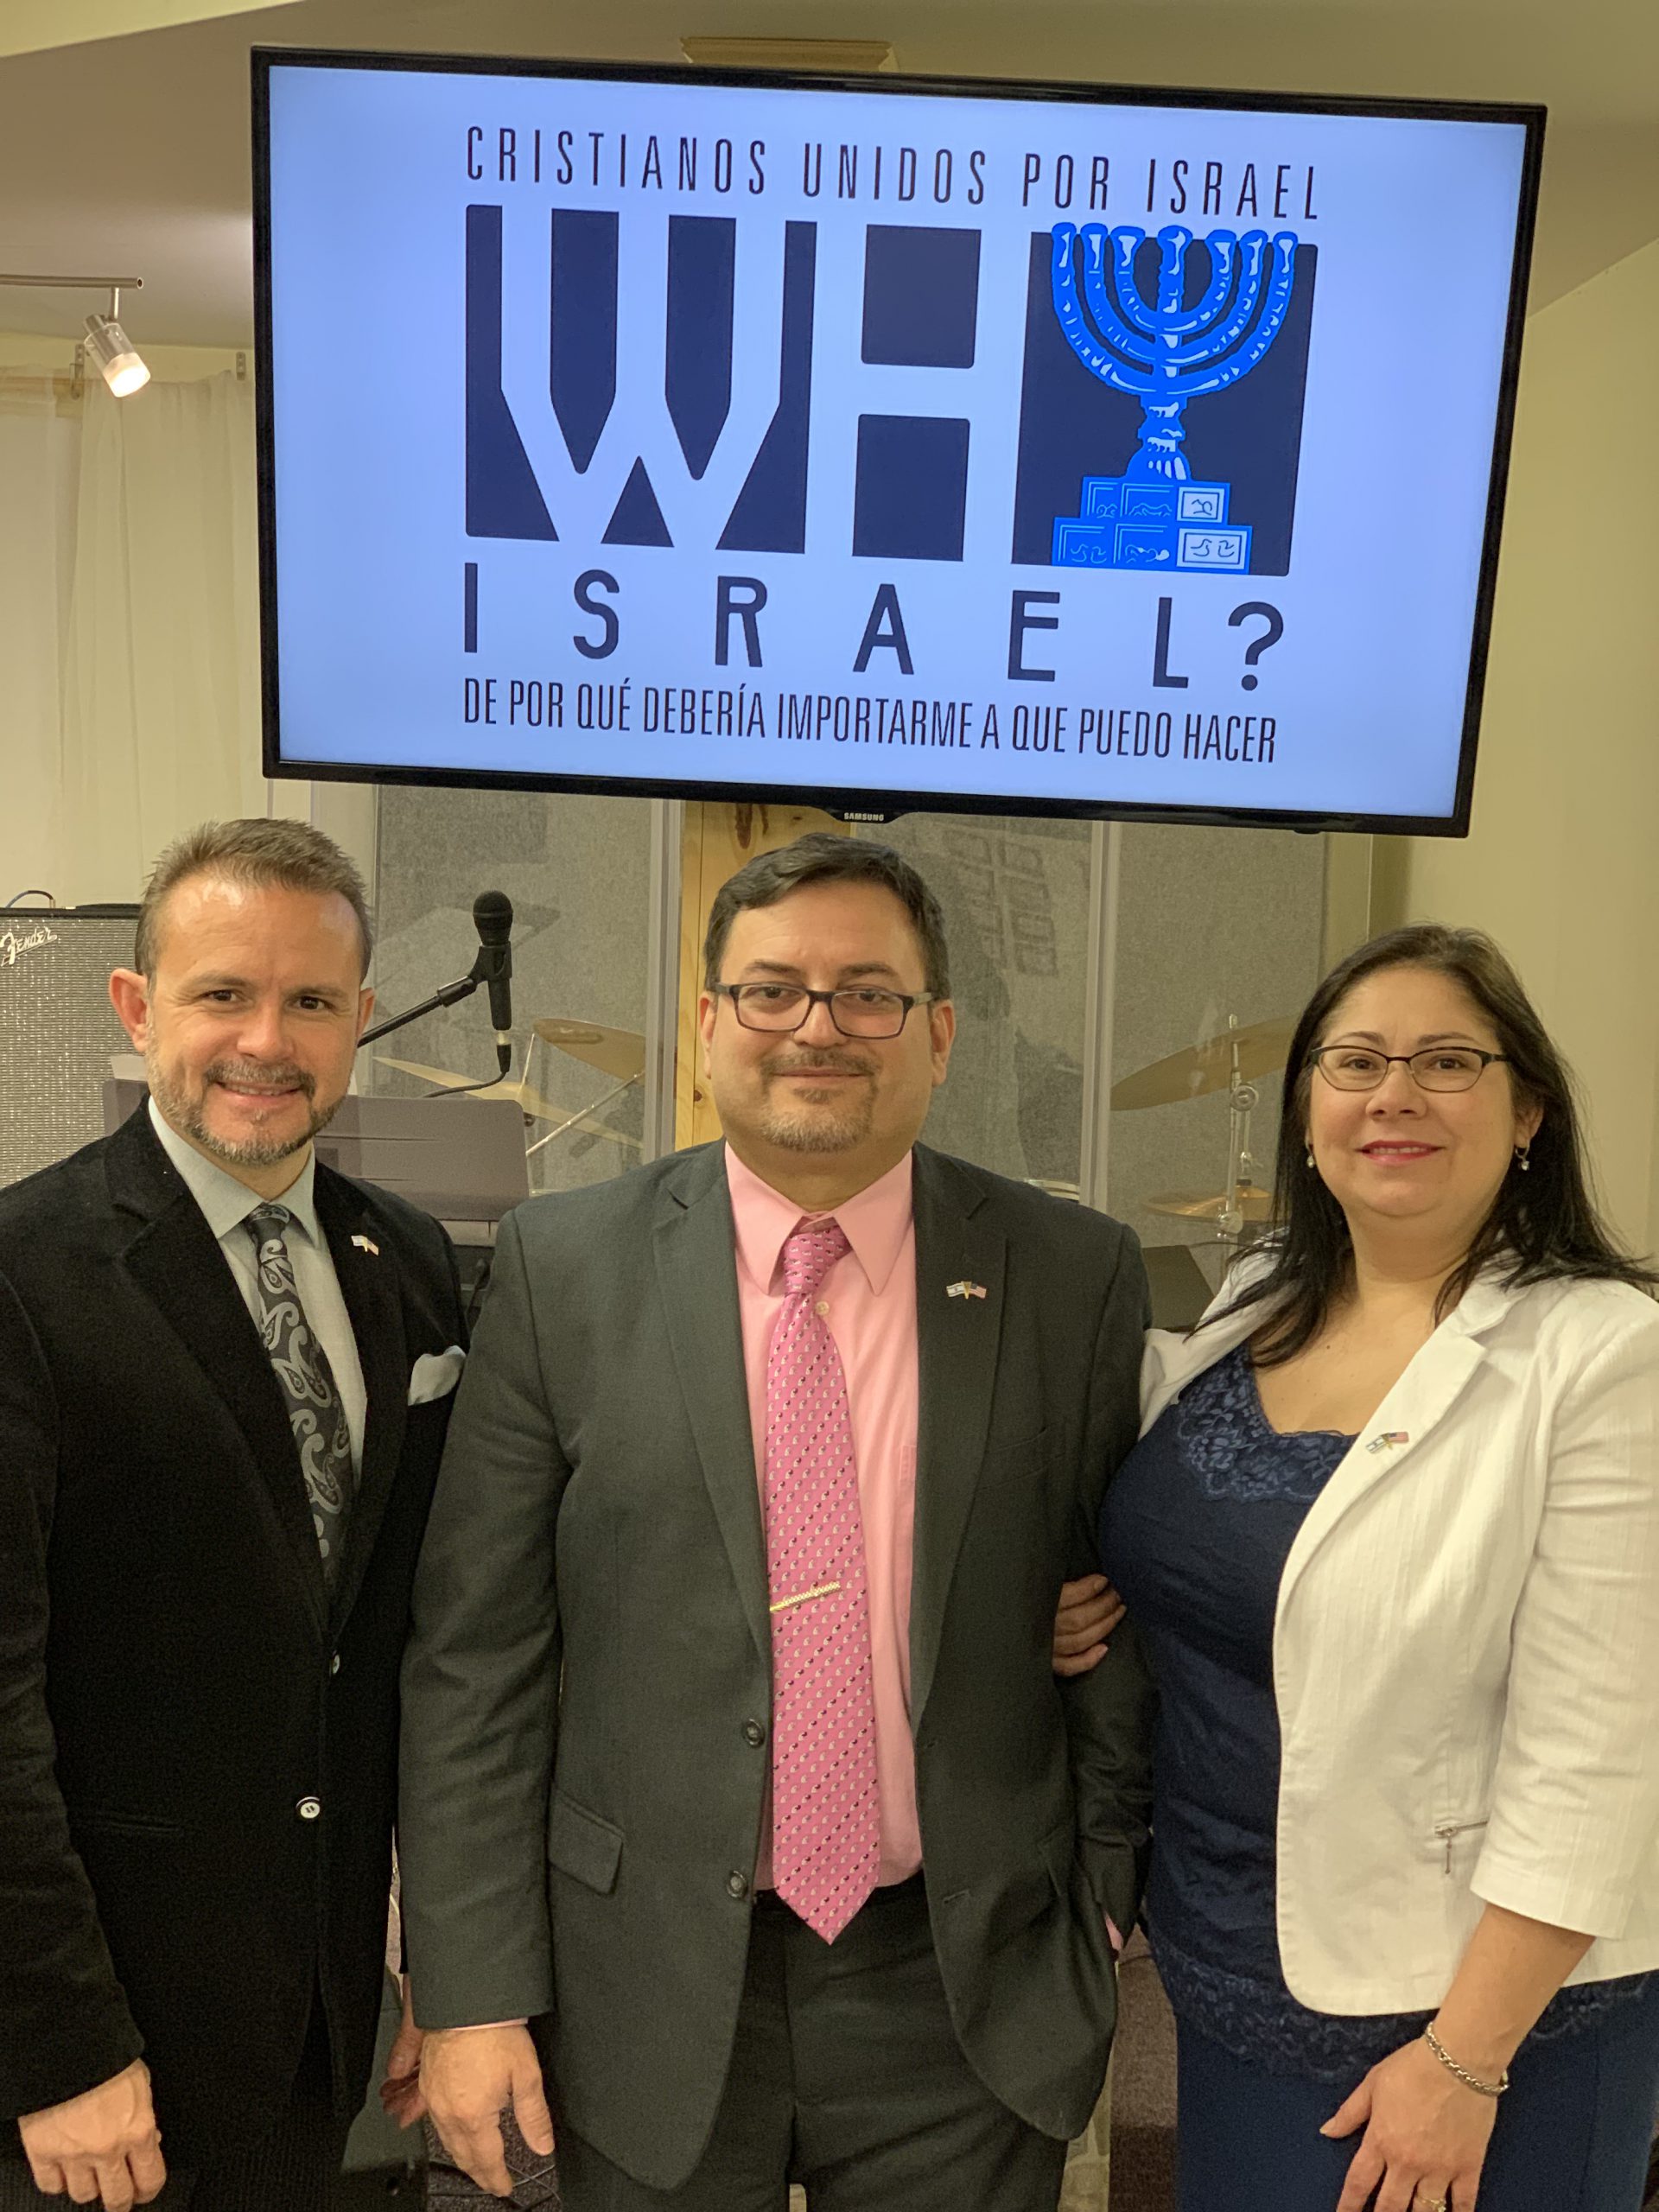 April 5 - Milwaukee, WI - Why Israel Spanish